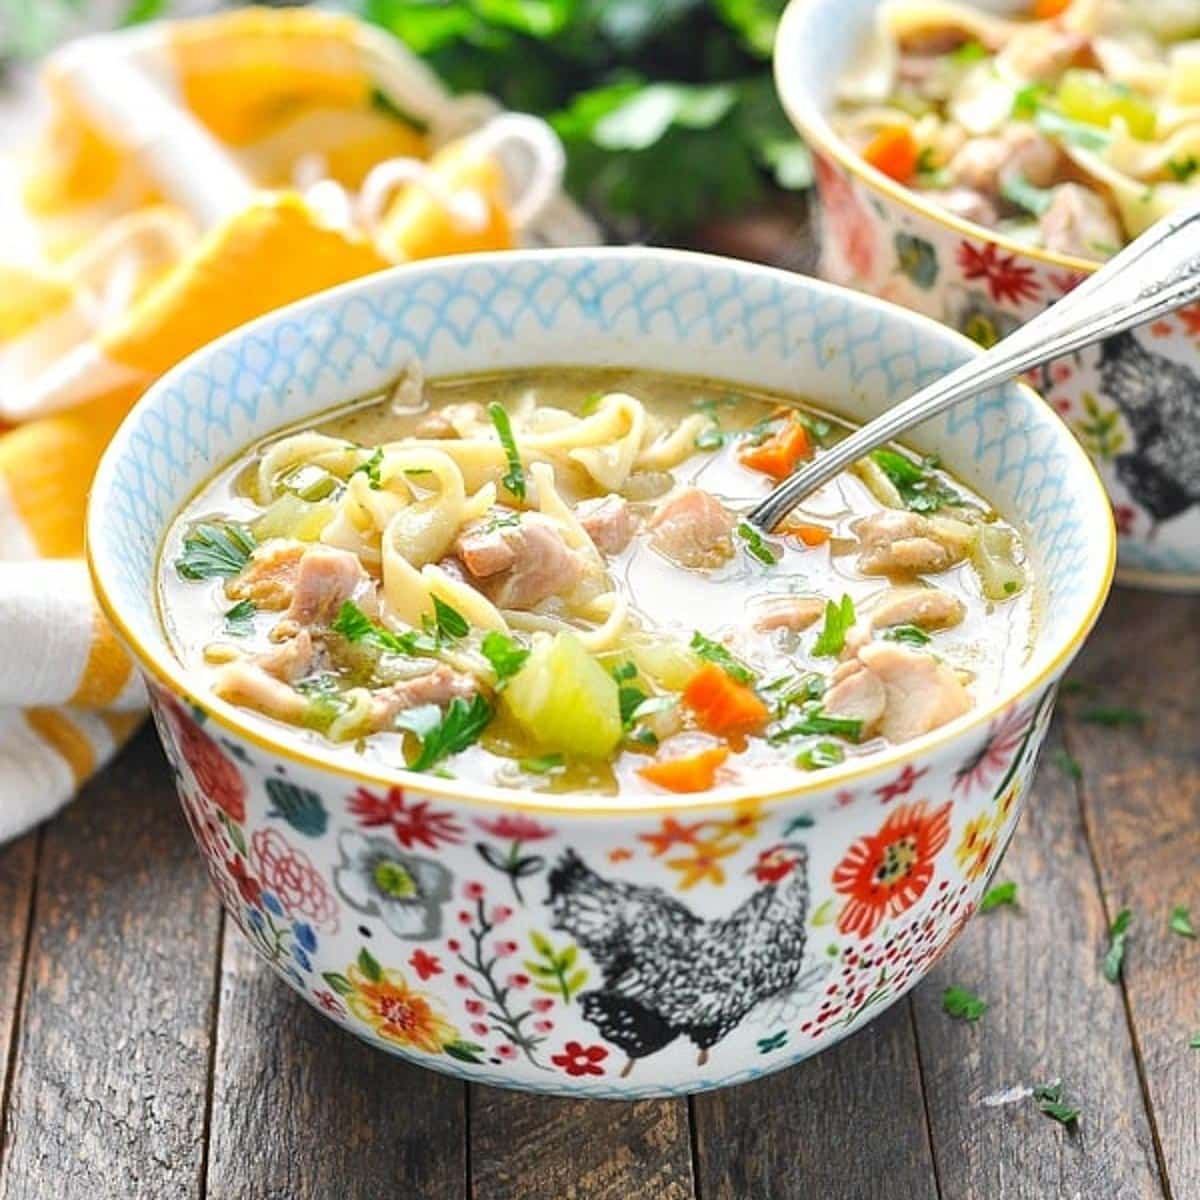 https://www.theseasonedmom.com/wp-content/uploads/2018/11/Turkey-Noodle-Soup-Square.jpg